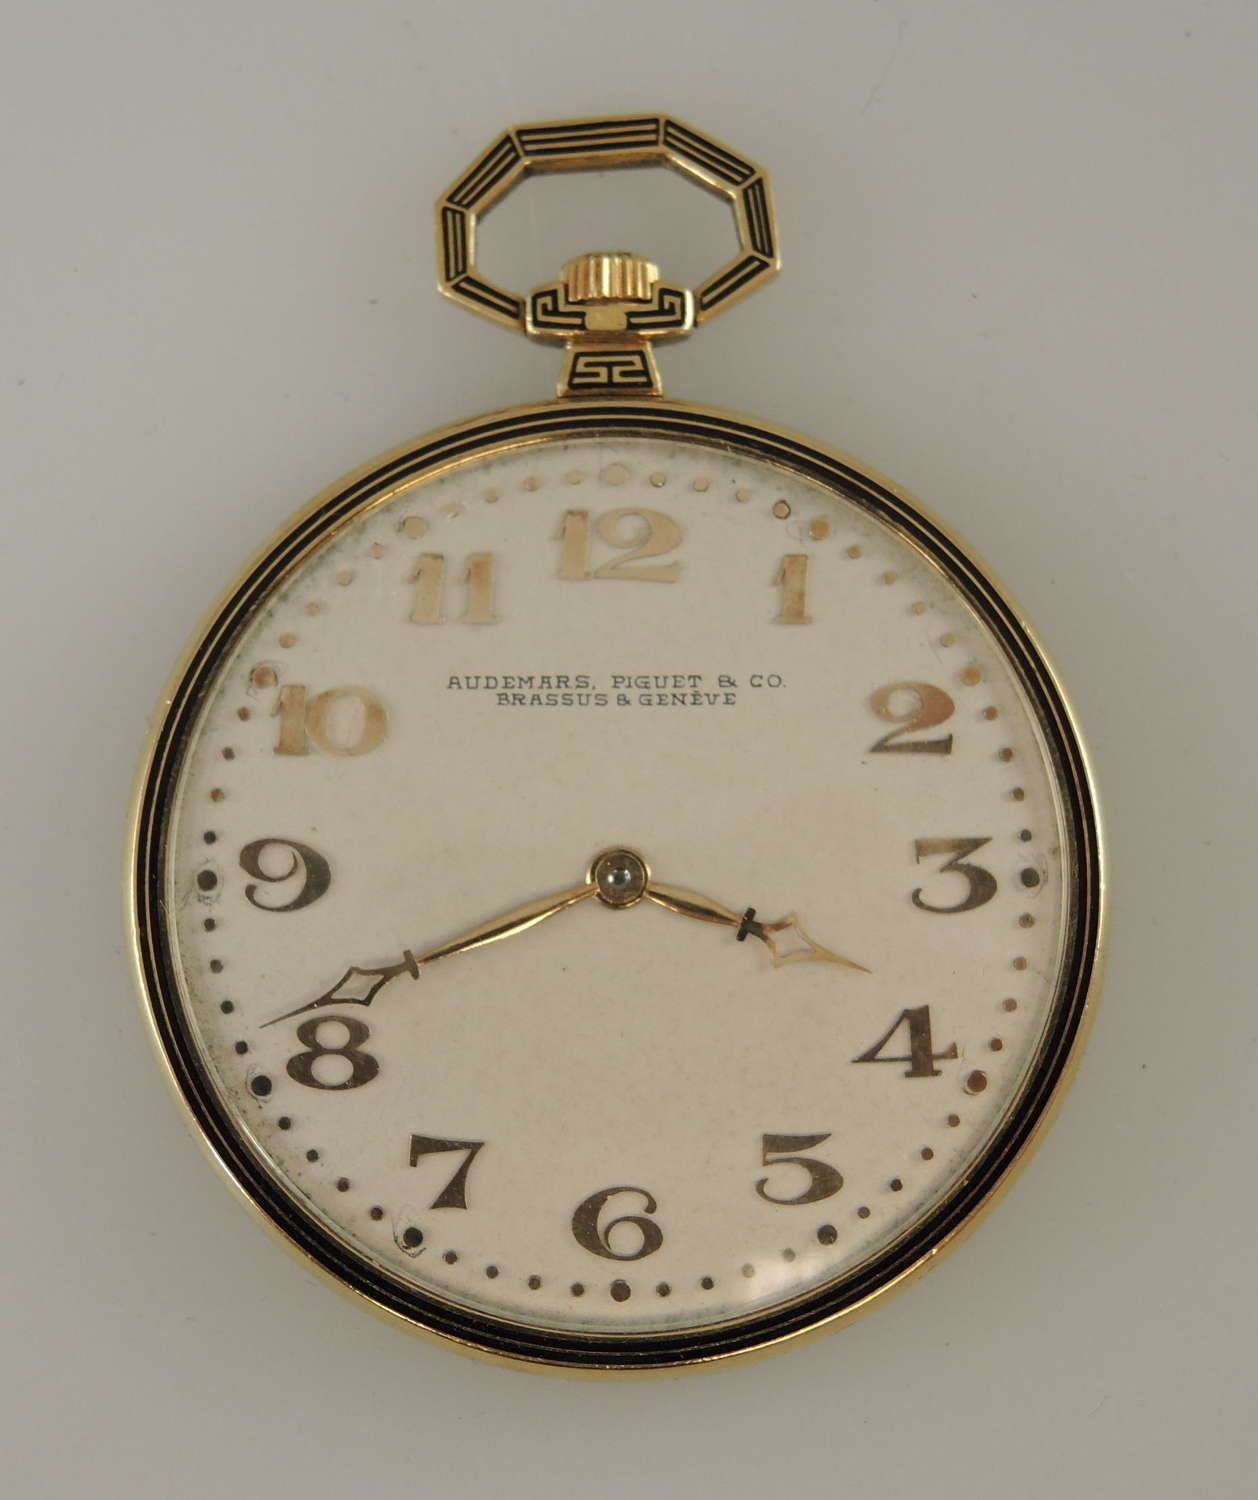 18K gold and enamel Audemars, Piguet & Co pocket watch c1918